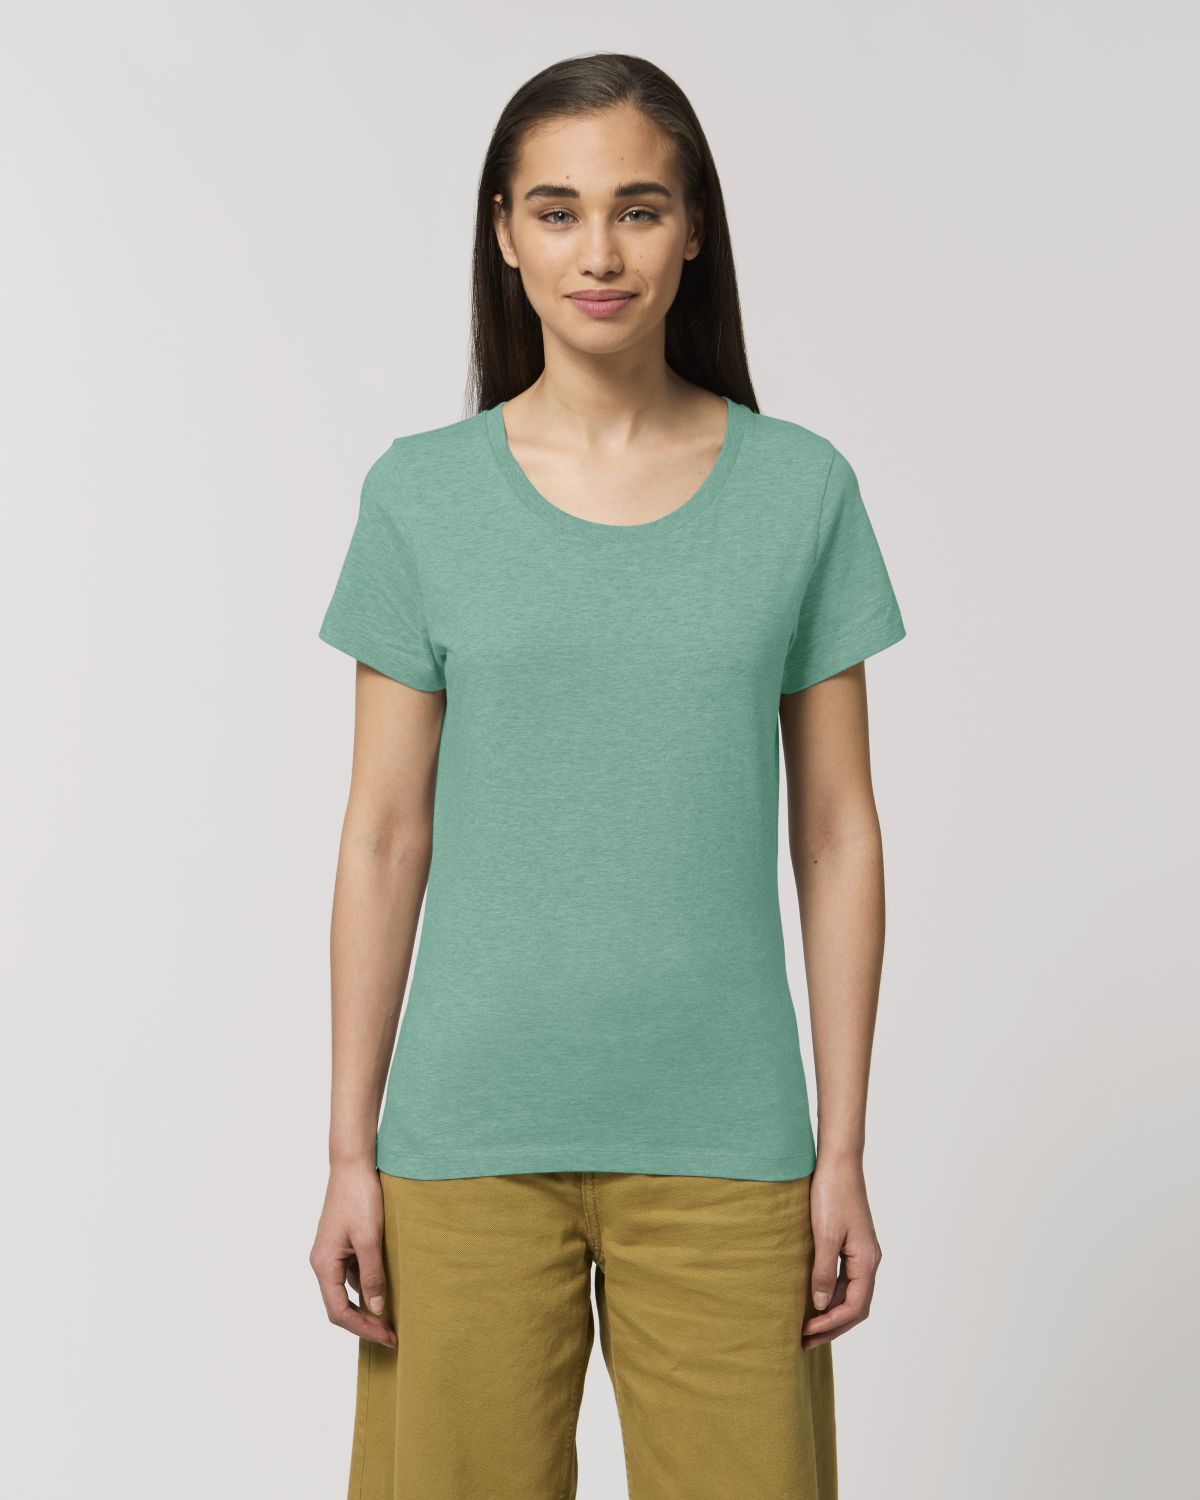 Weisshorn Klassik  - Ladies Organic Shirt (meliert)